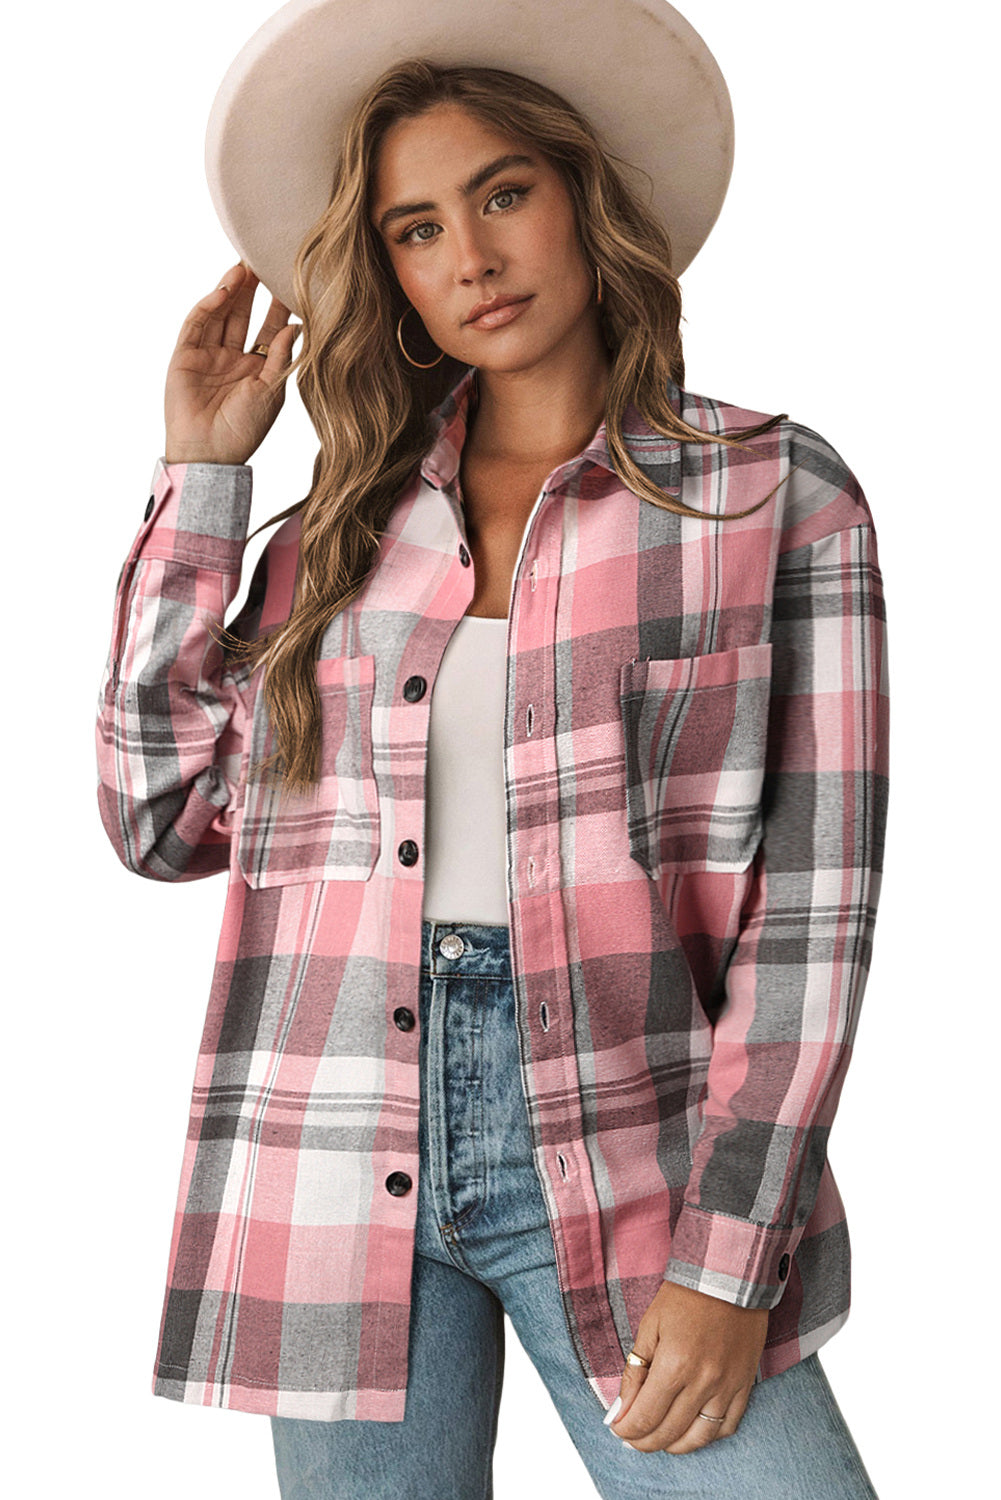 LC2552972-10-S, LC2552972-10-M, LC2552972-10-L, LC2552972-10-XL, LC2552972-10-2XL, Pink Womens Plaid Button Up Patch Pocket Shirt Oversized Tops Jacket